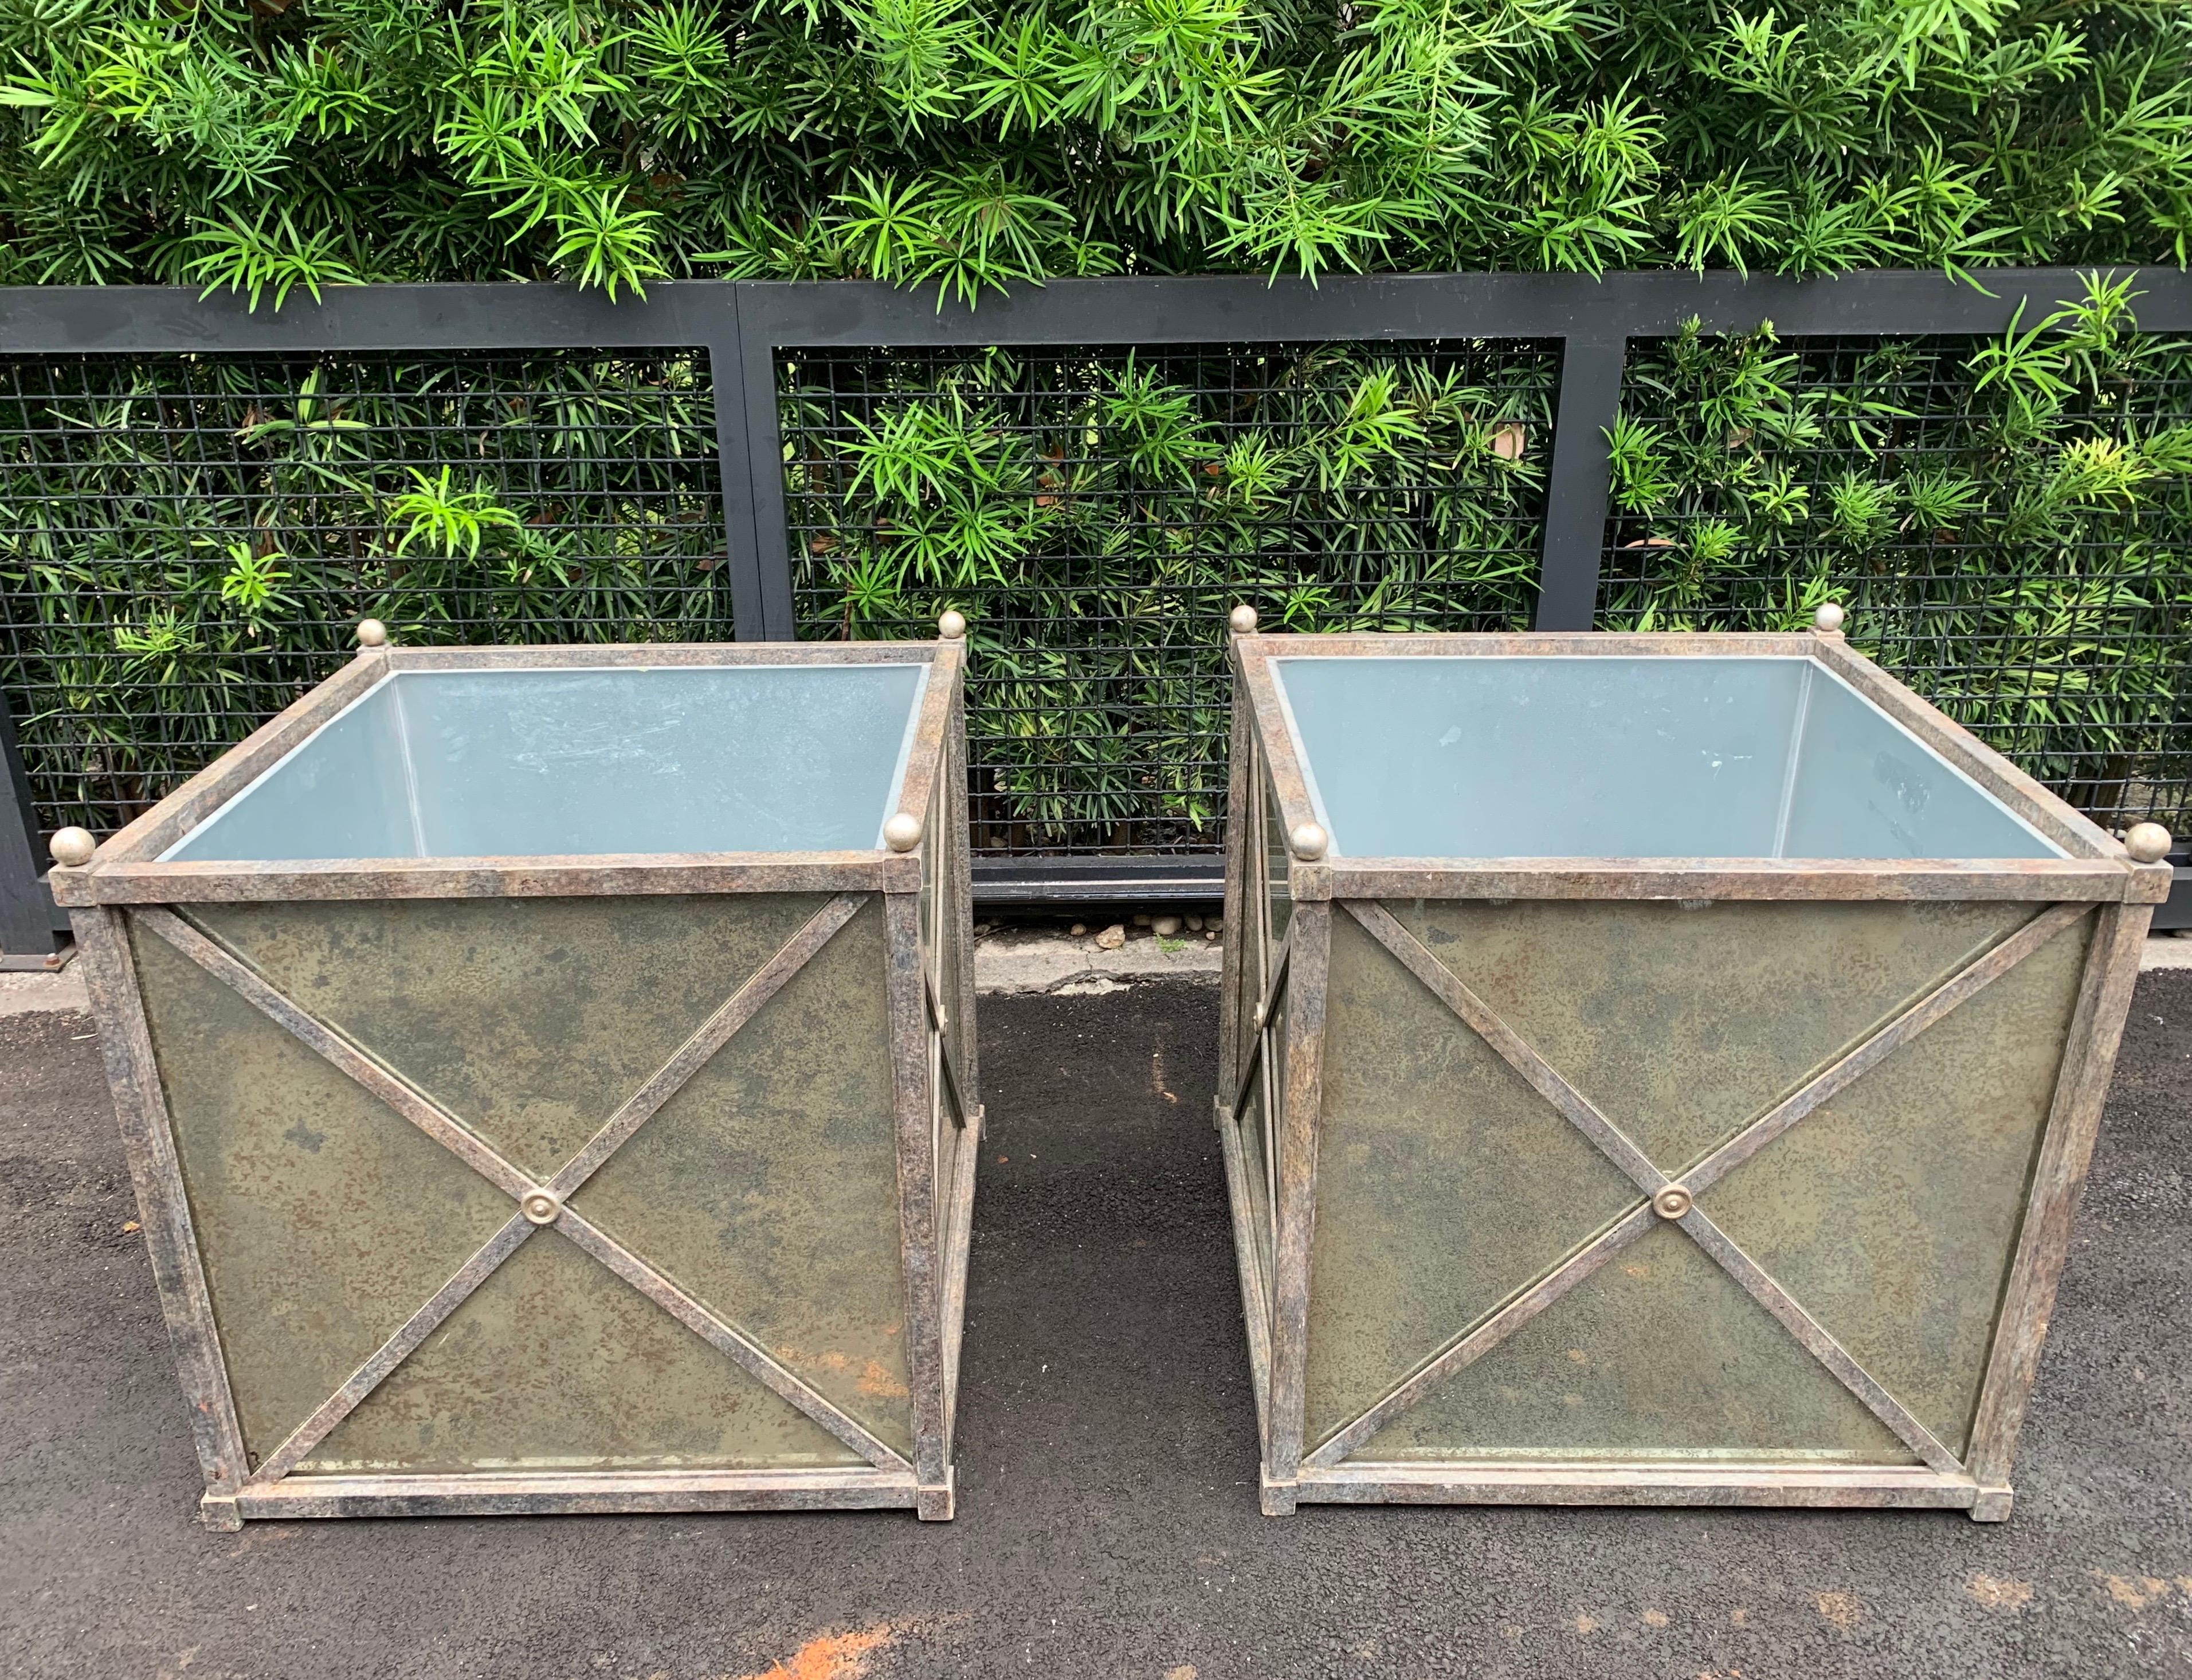 mirror planter box